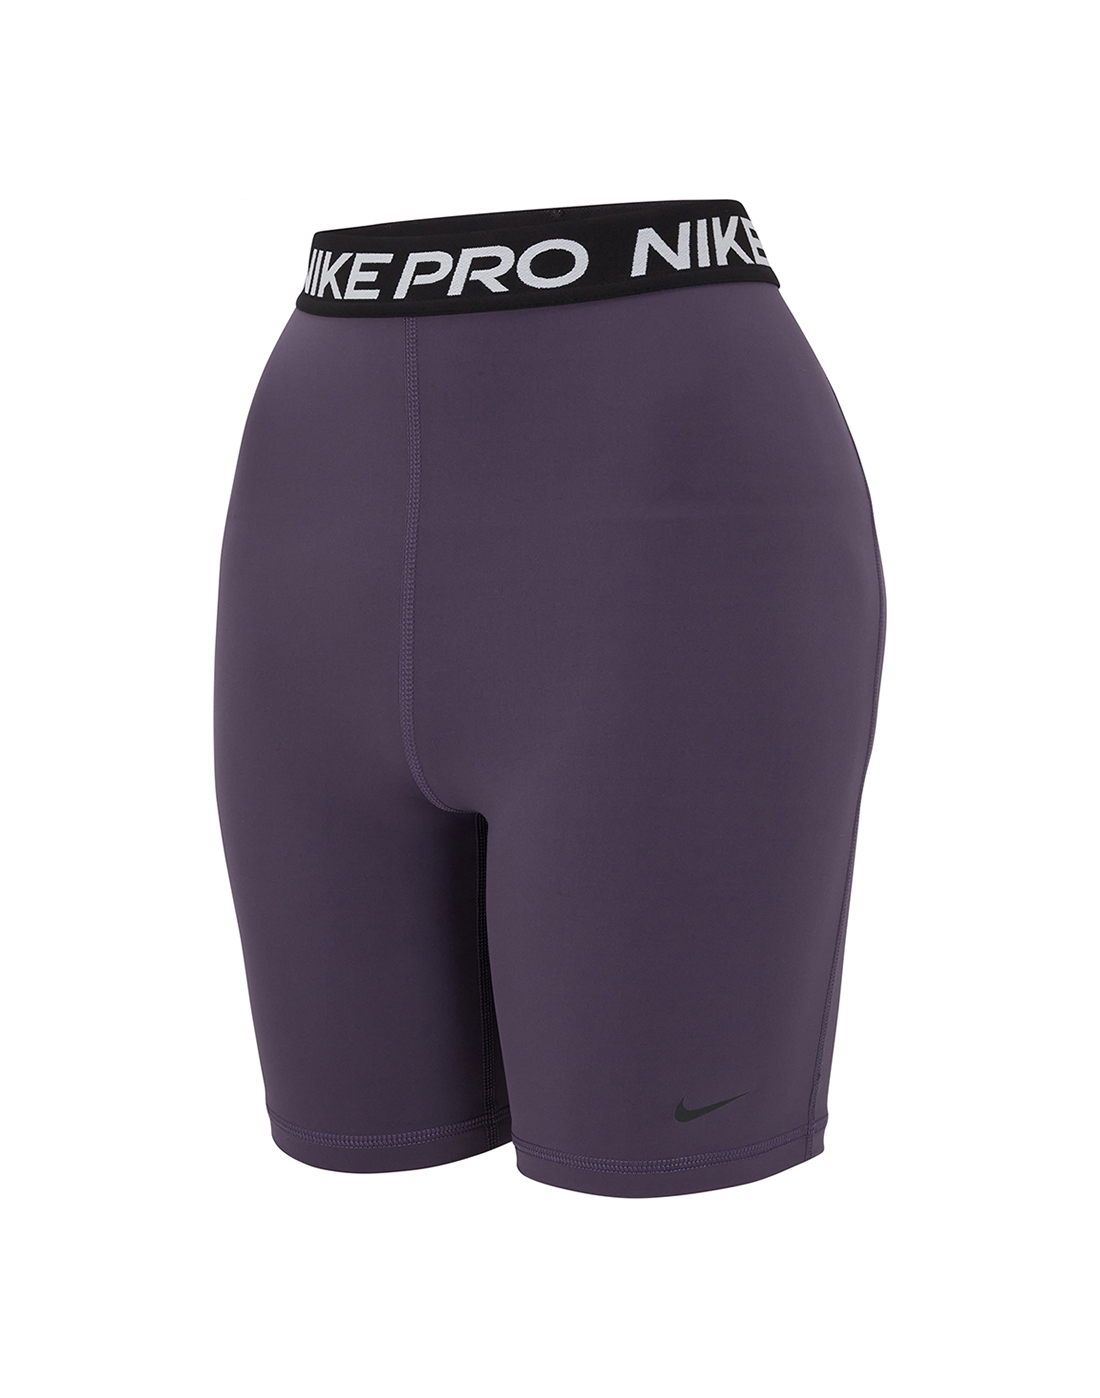 nike pro 7 inch shorts womens